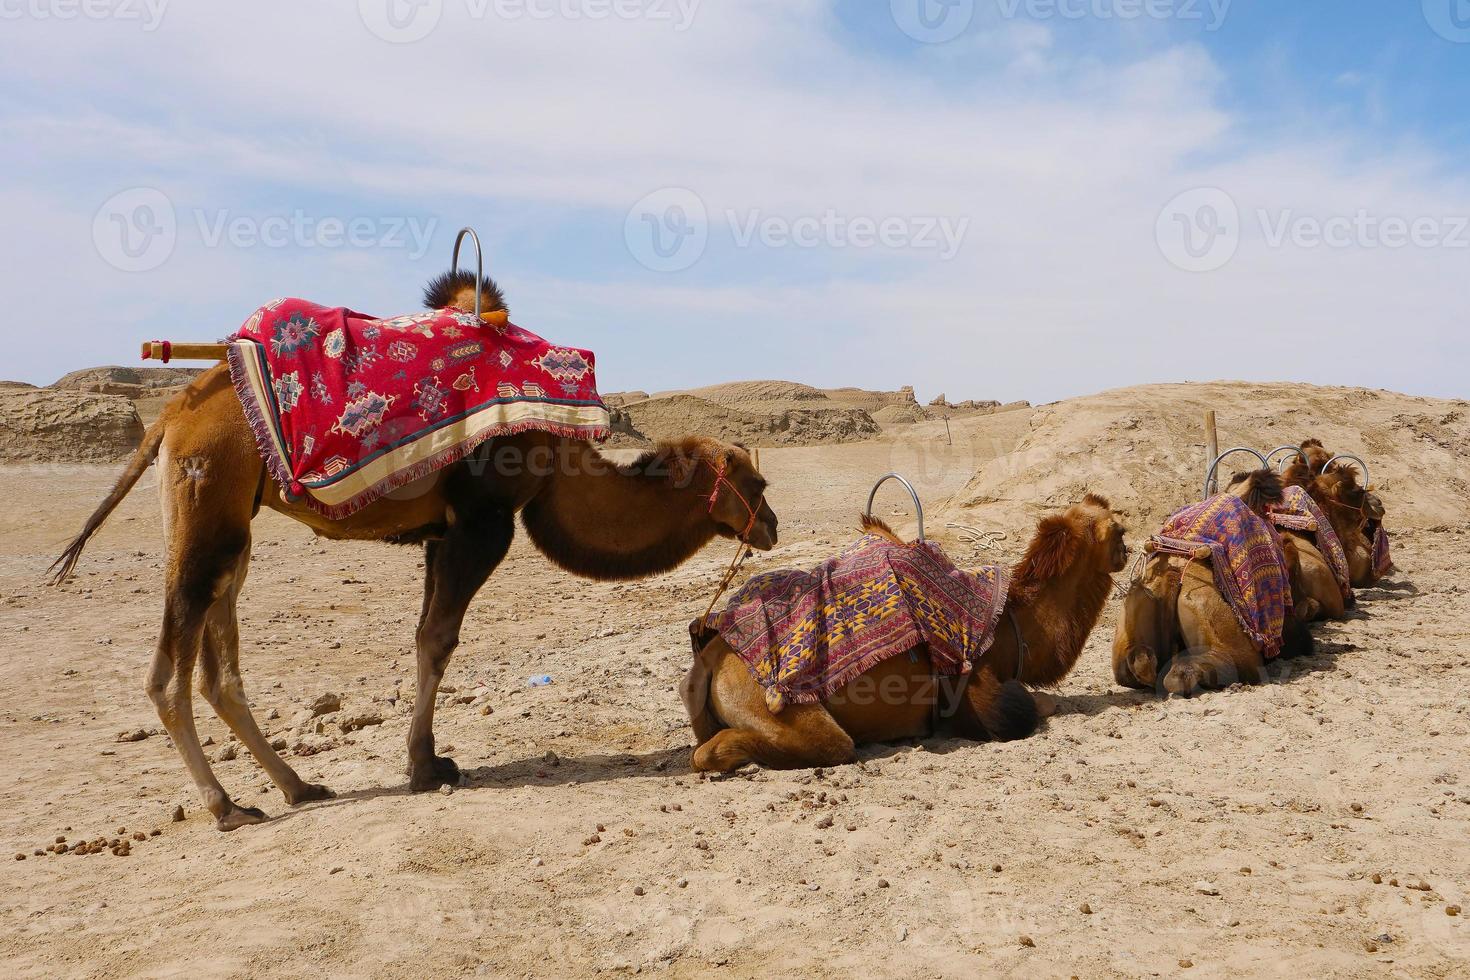 dachaidan wusute vatten yadan geologiska park och kamel Qinghai Kina foto